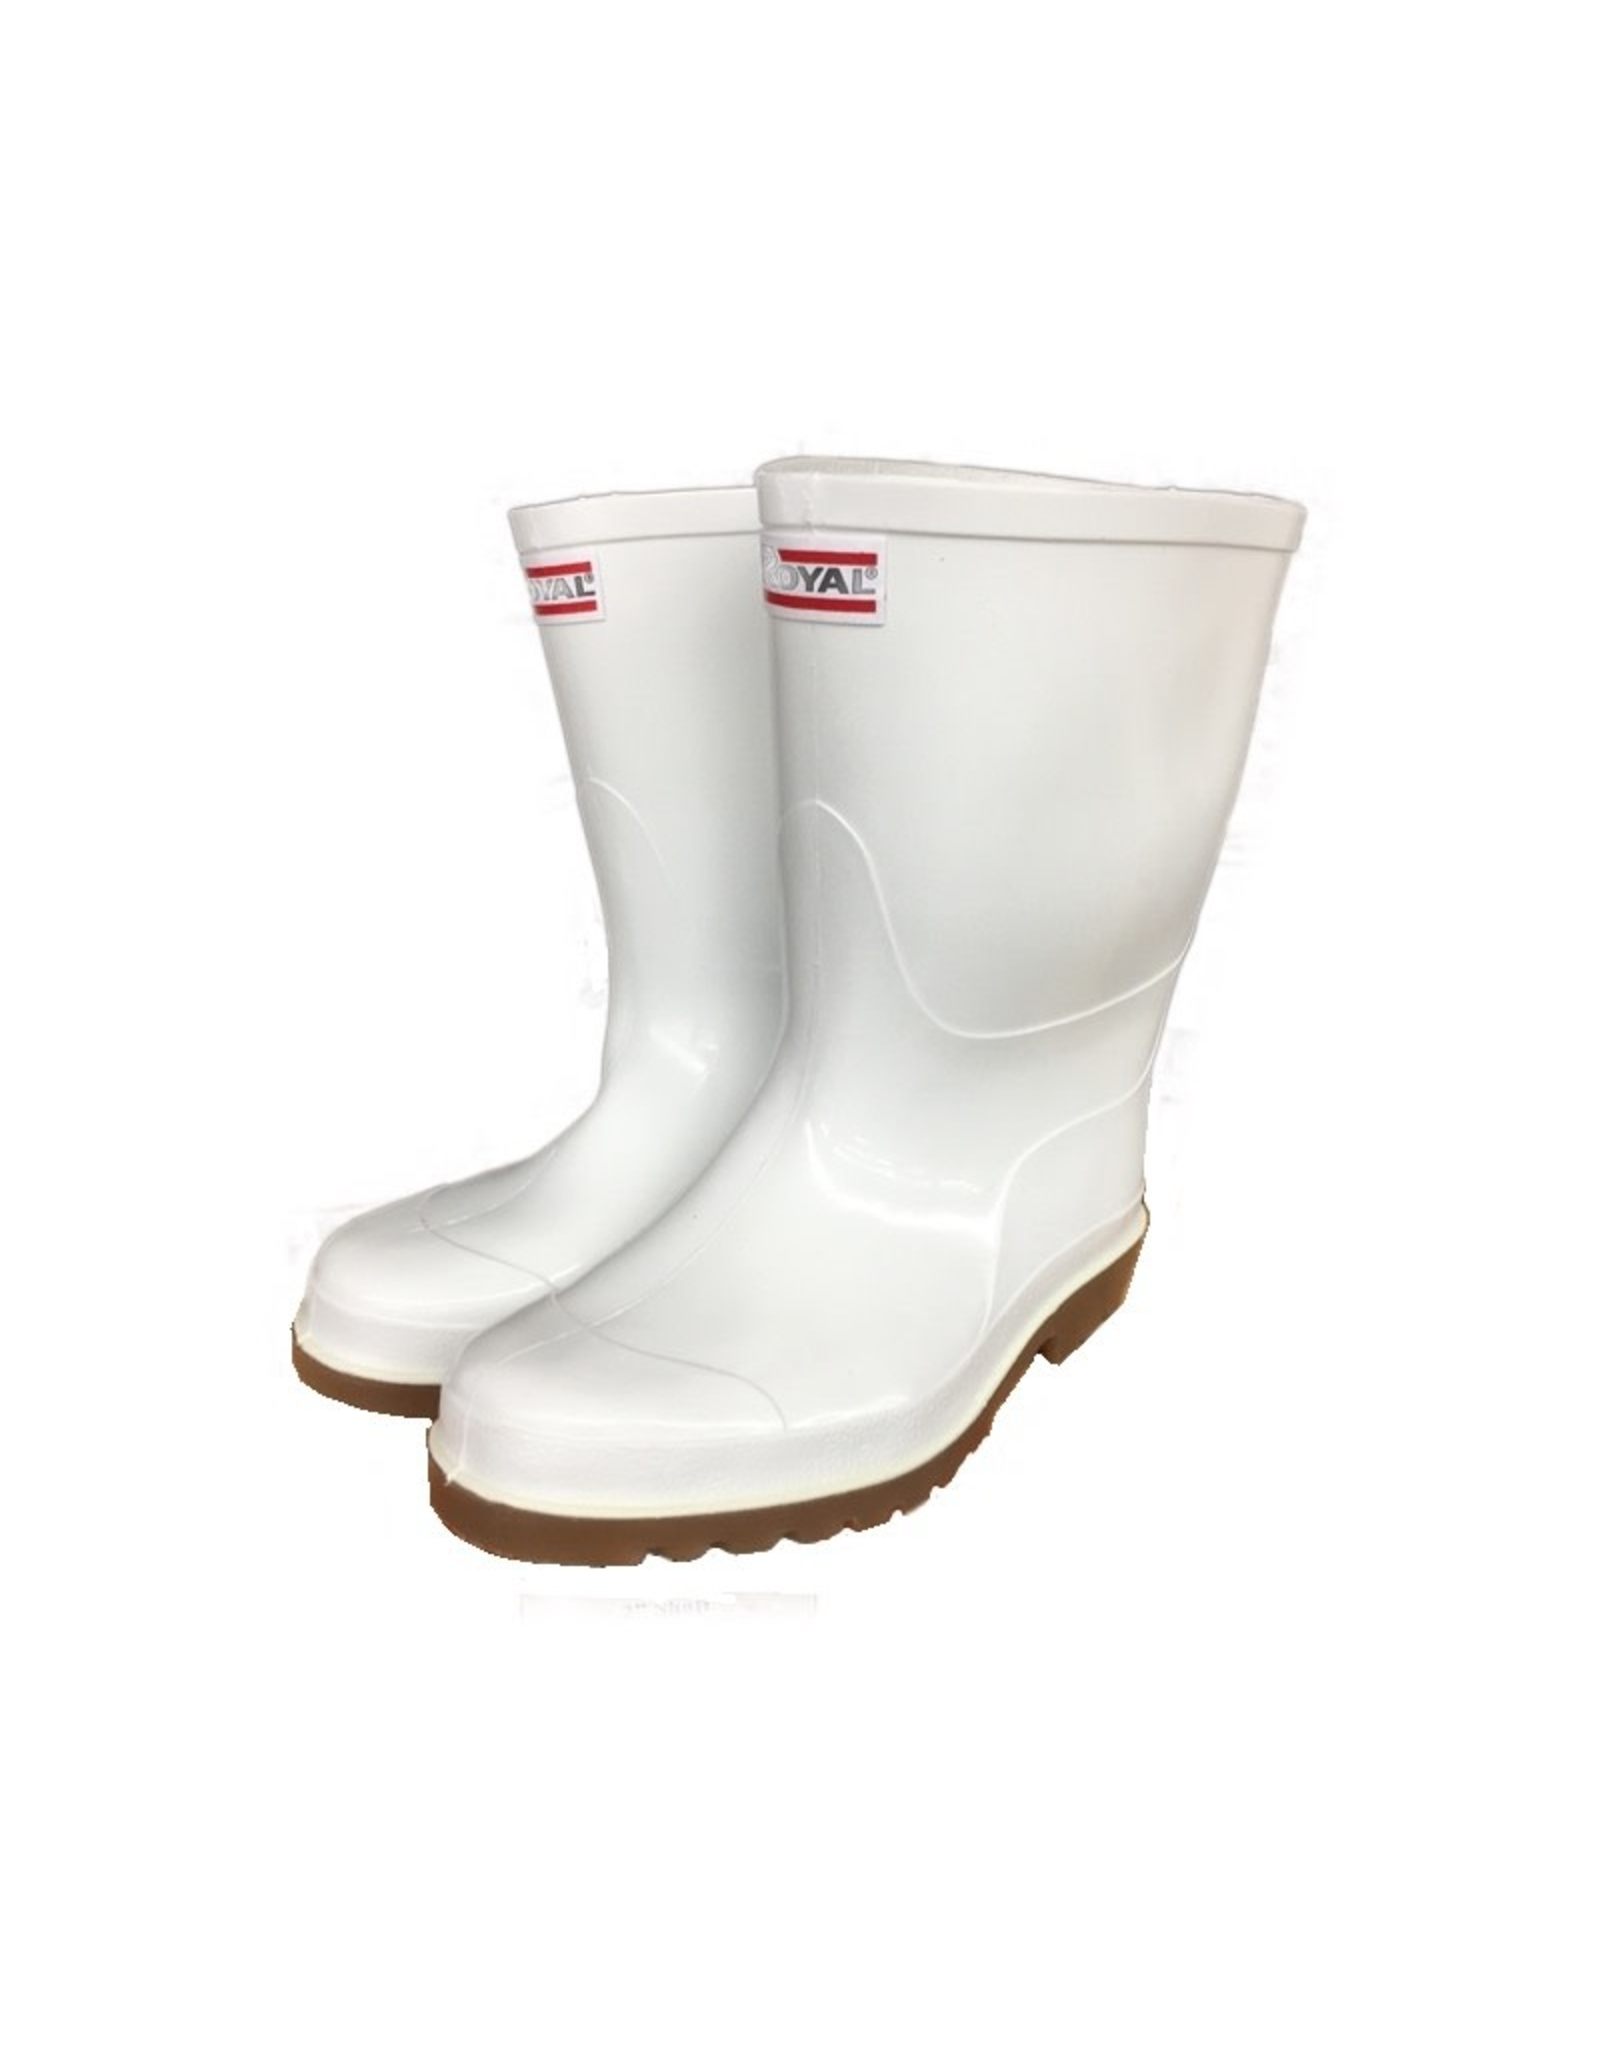 Royal Brand White Shrimp Boots - Norco 